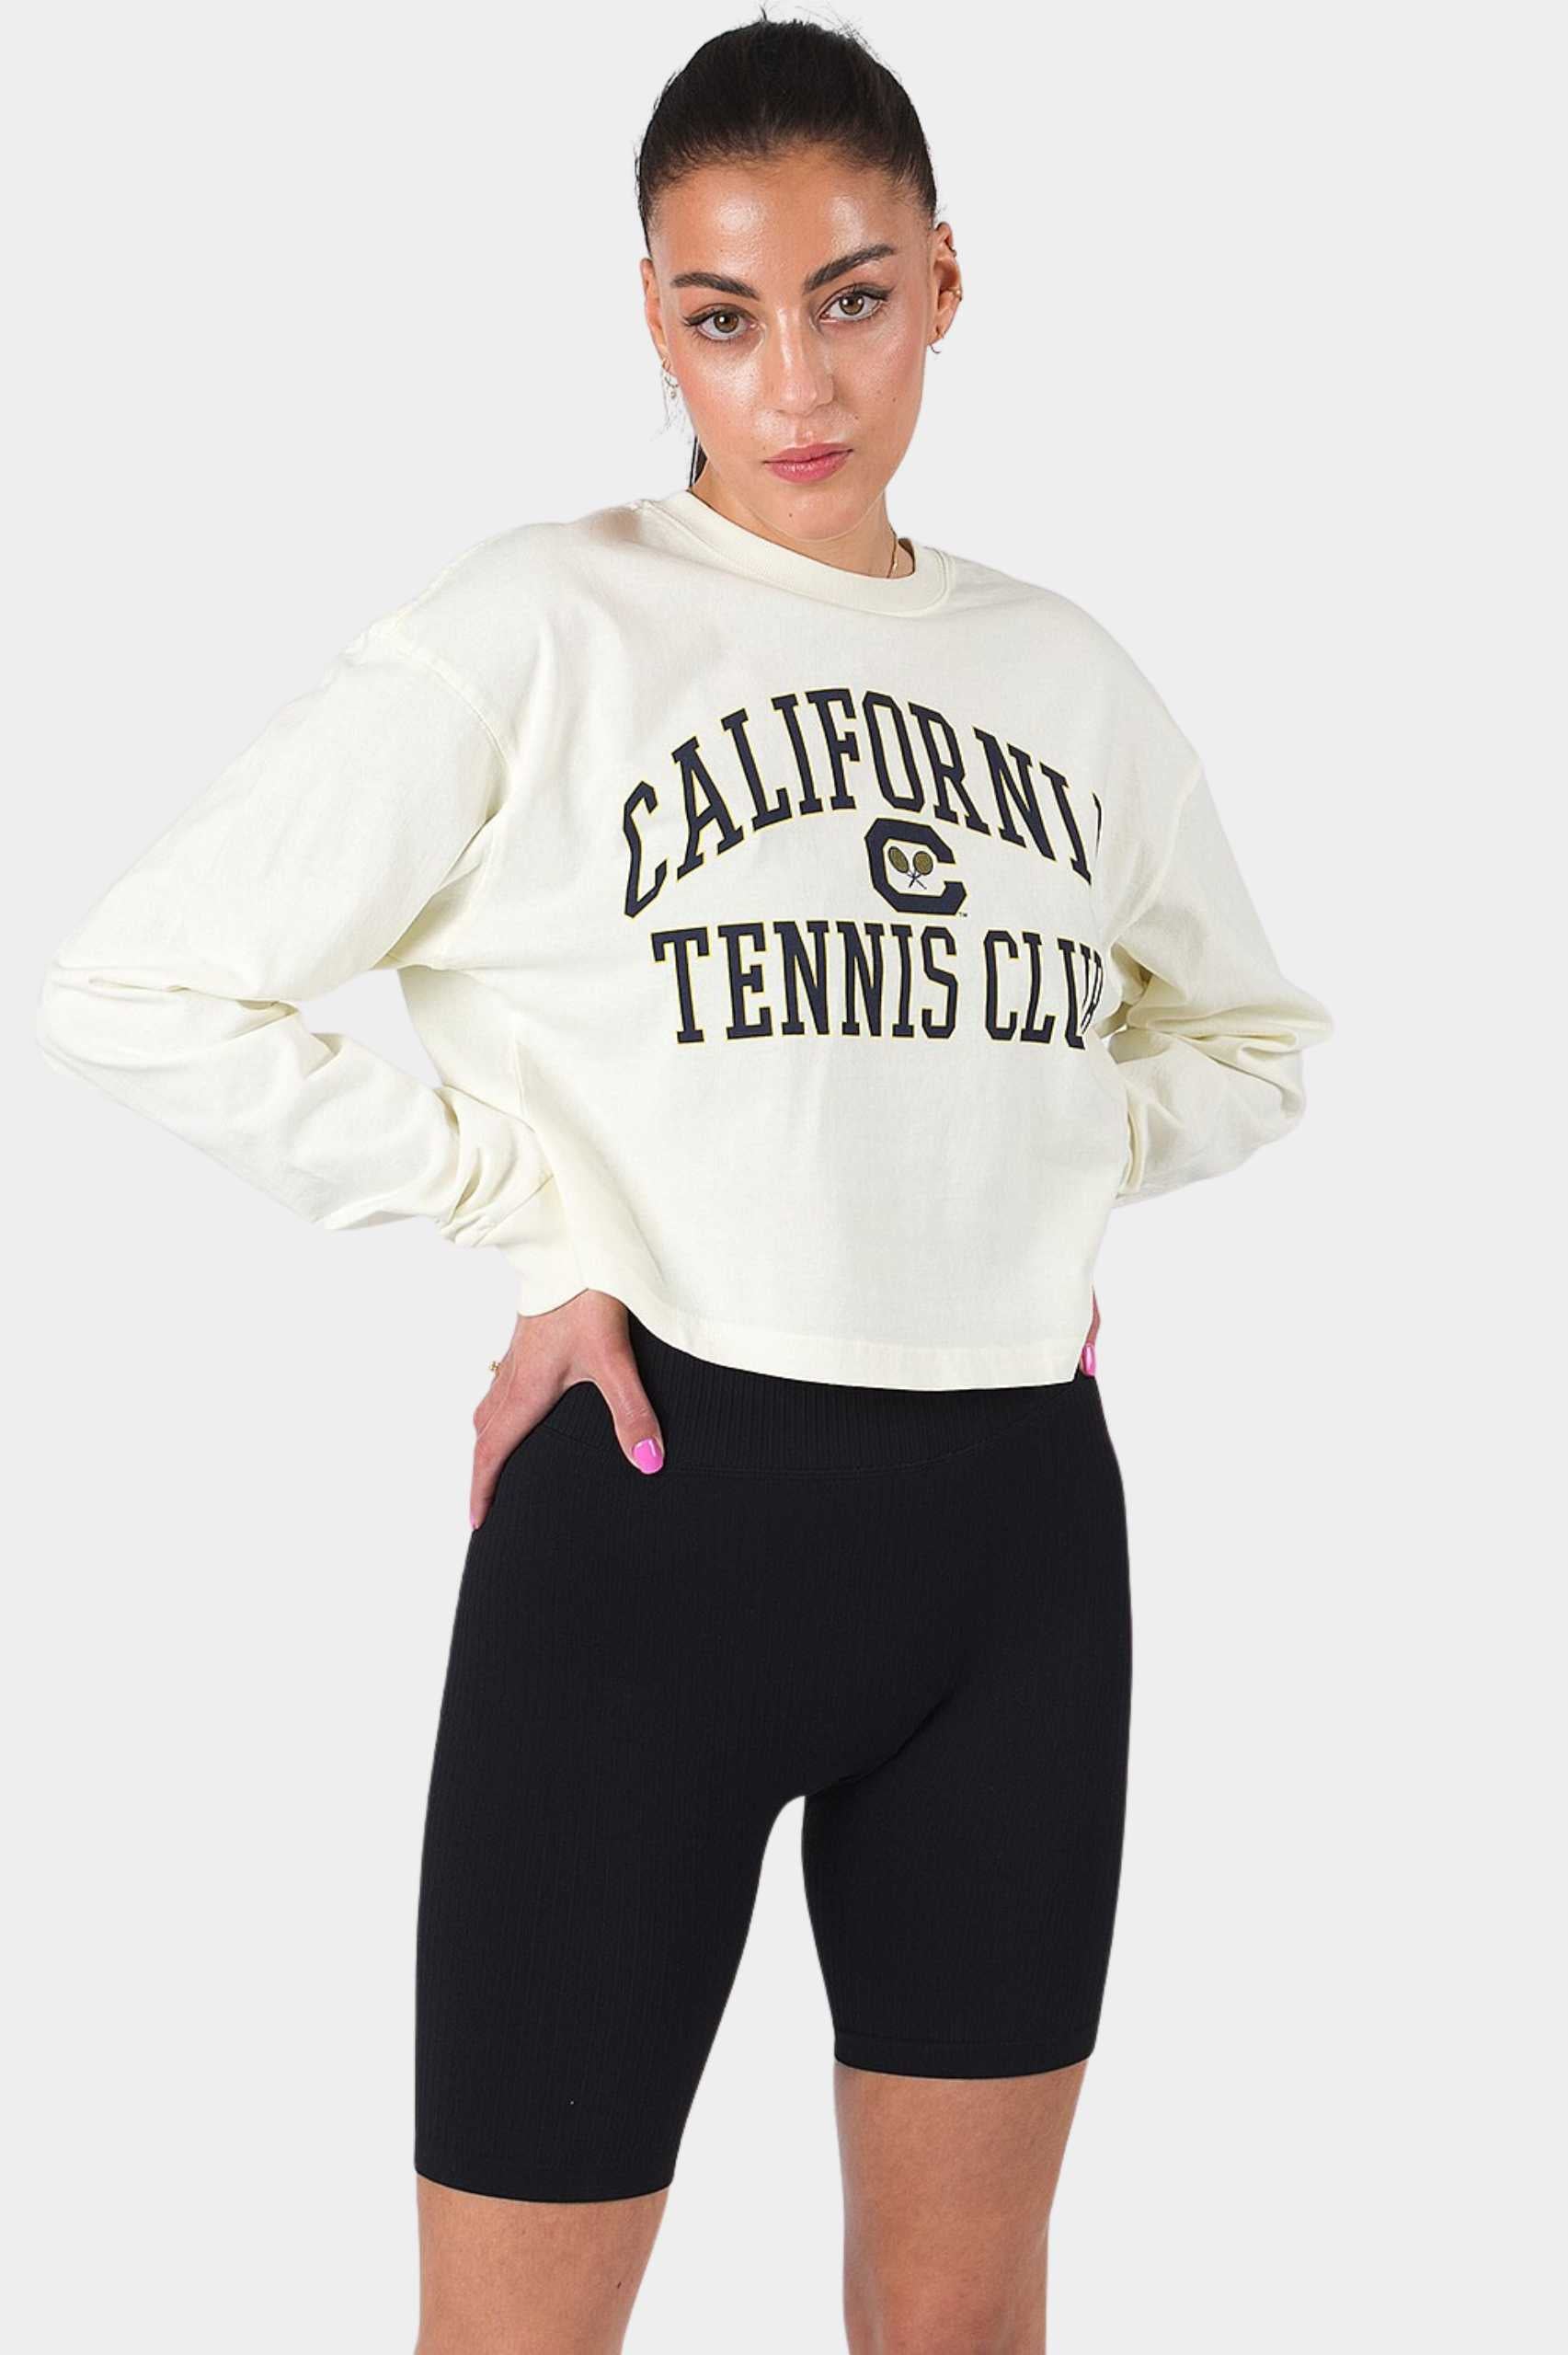 NCAA Berkeley Tennis Club LS Crop Tee